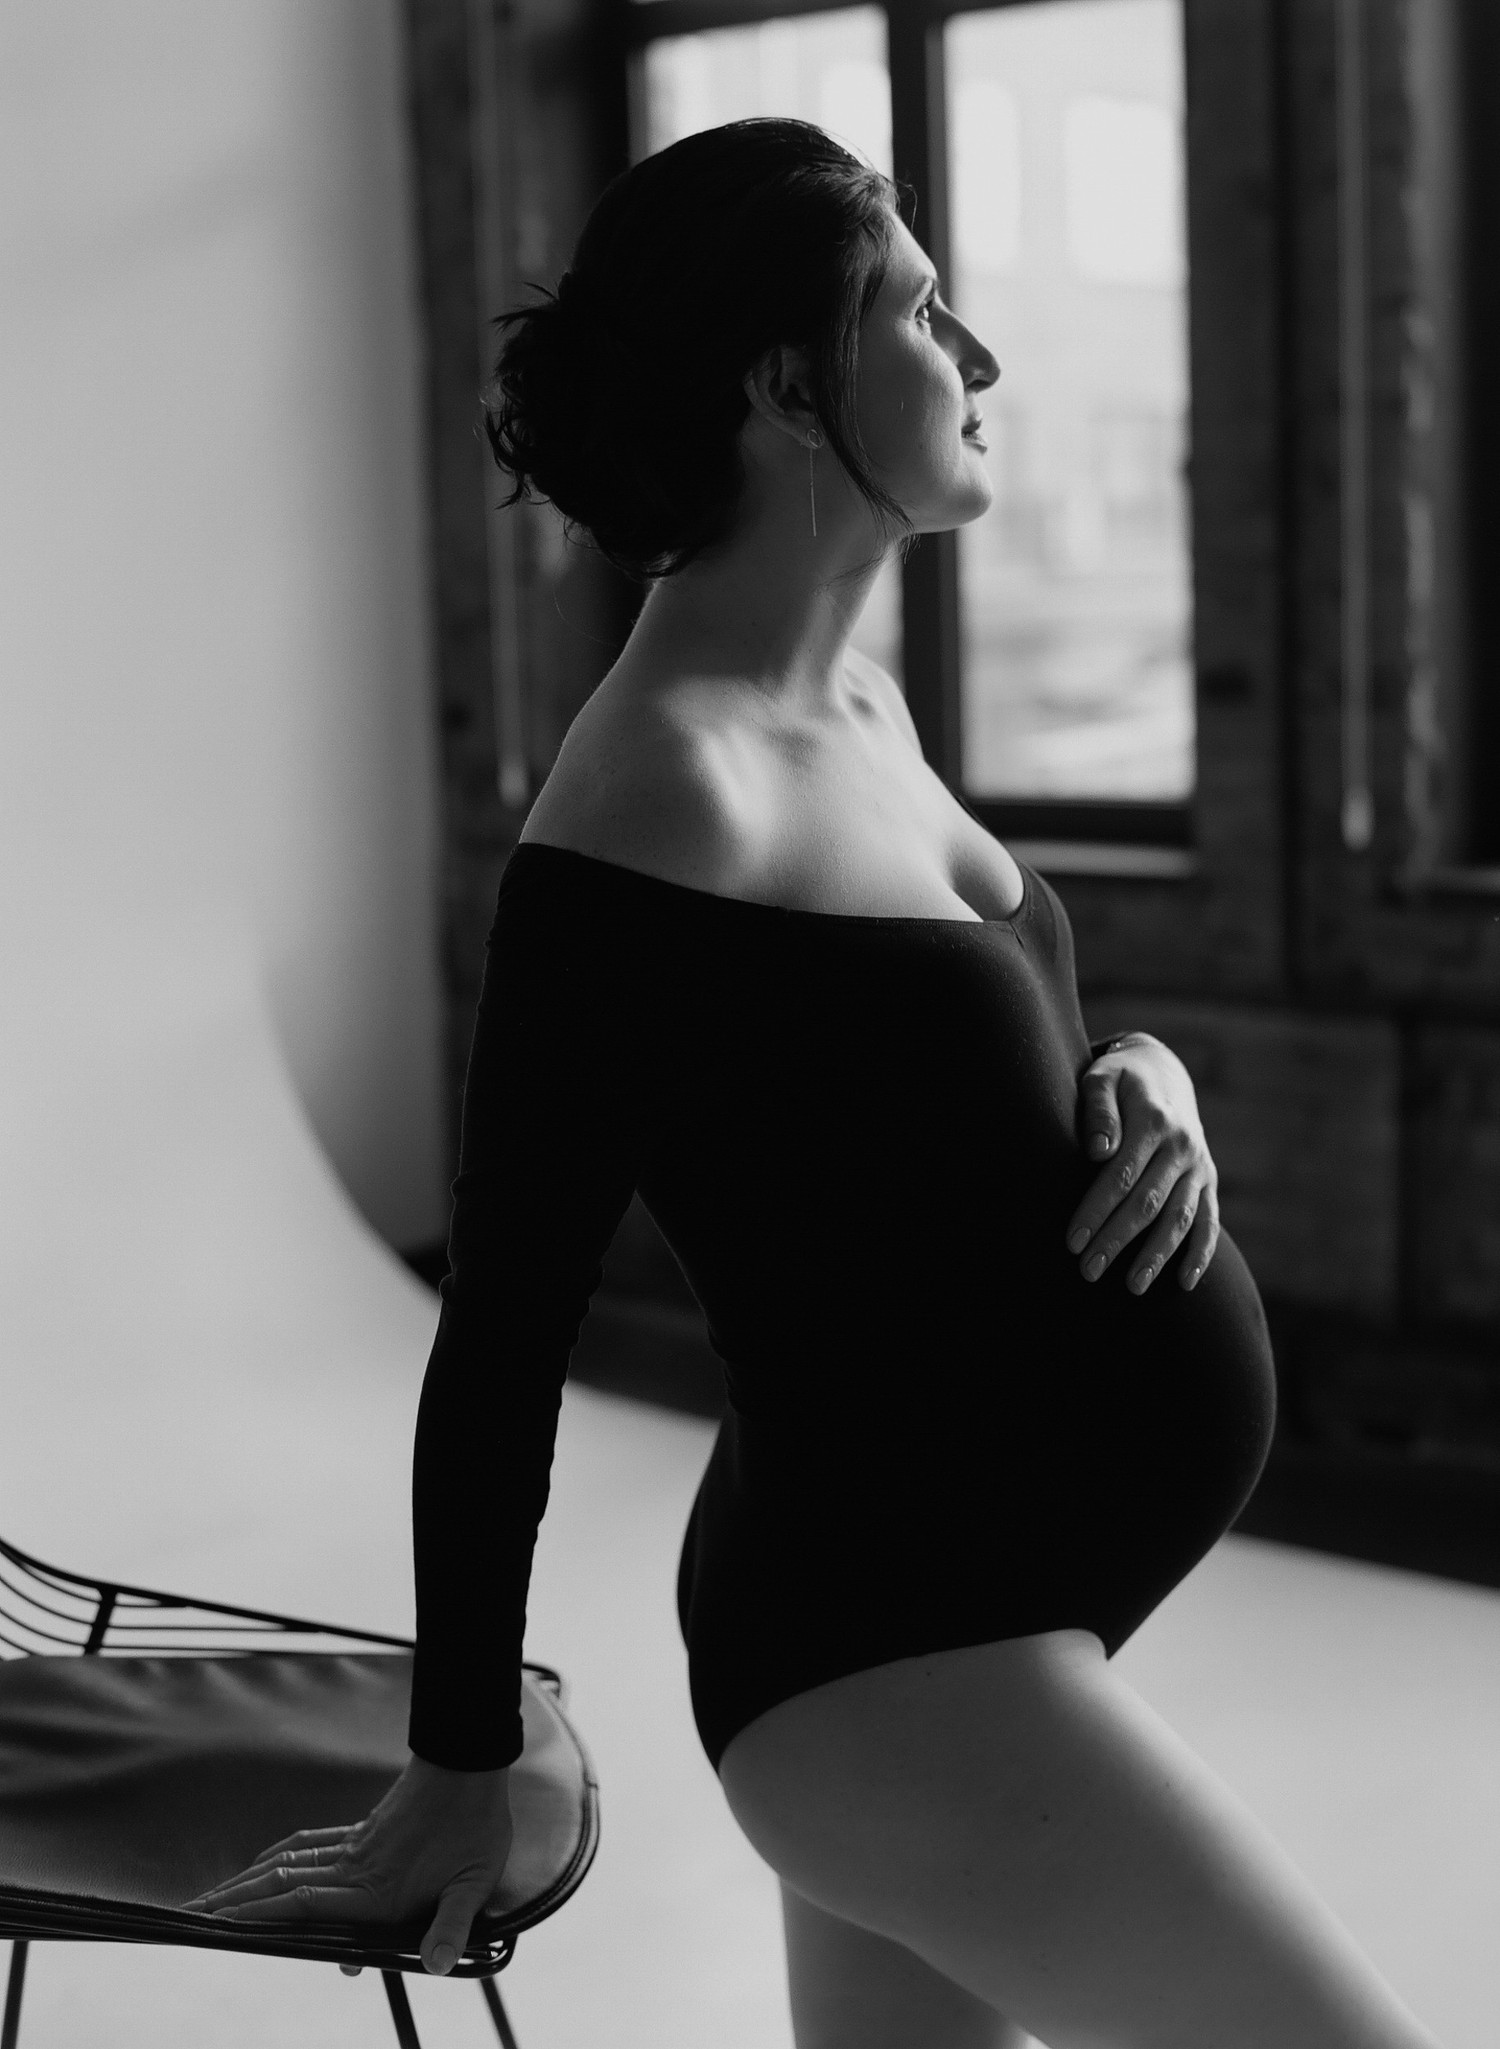 Pregnancy Photo Session Photo Studio Fabric Background Black Bodysuit Tights  Stock Photo by ©Blokhin_Oleg@mail.ru 438986656